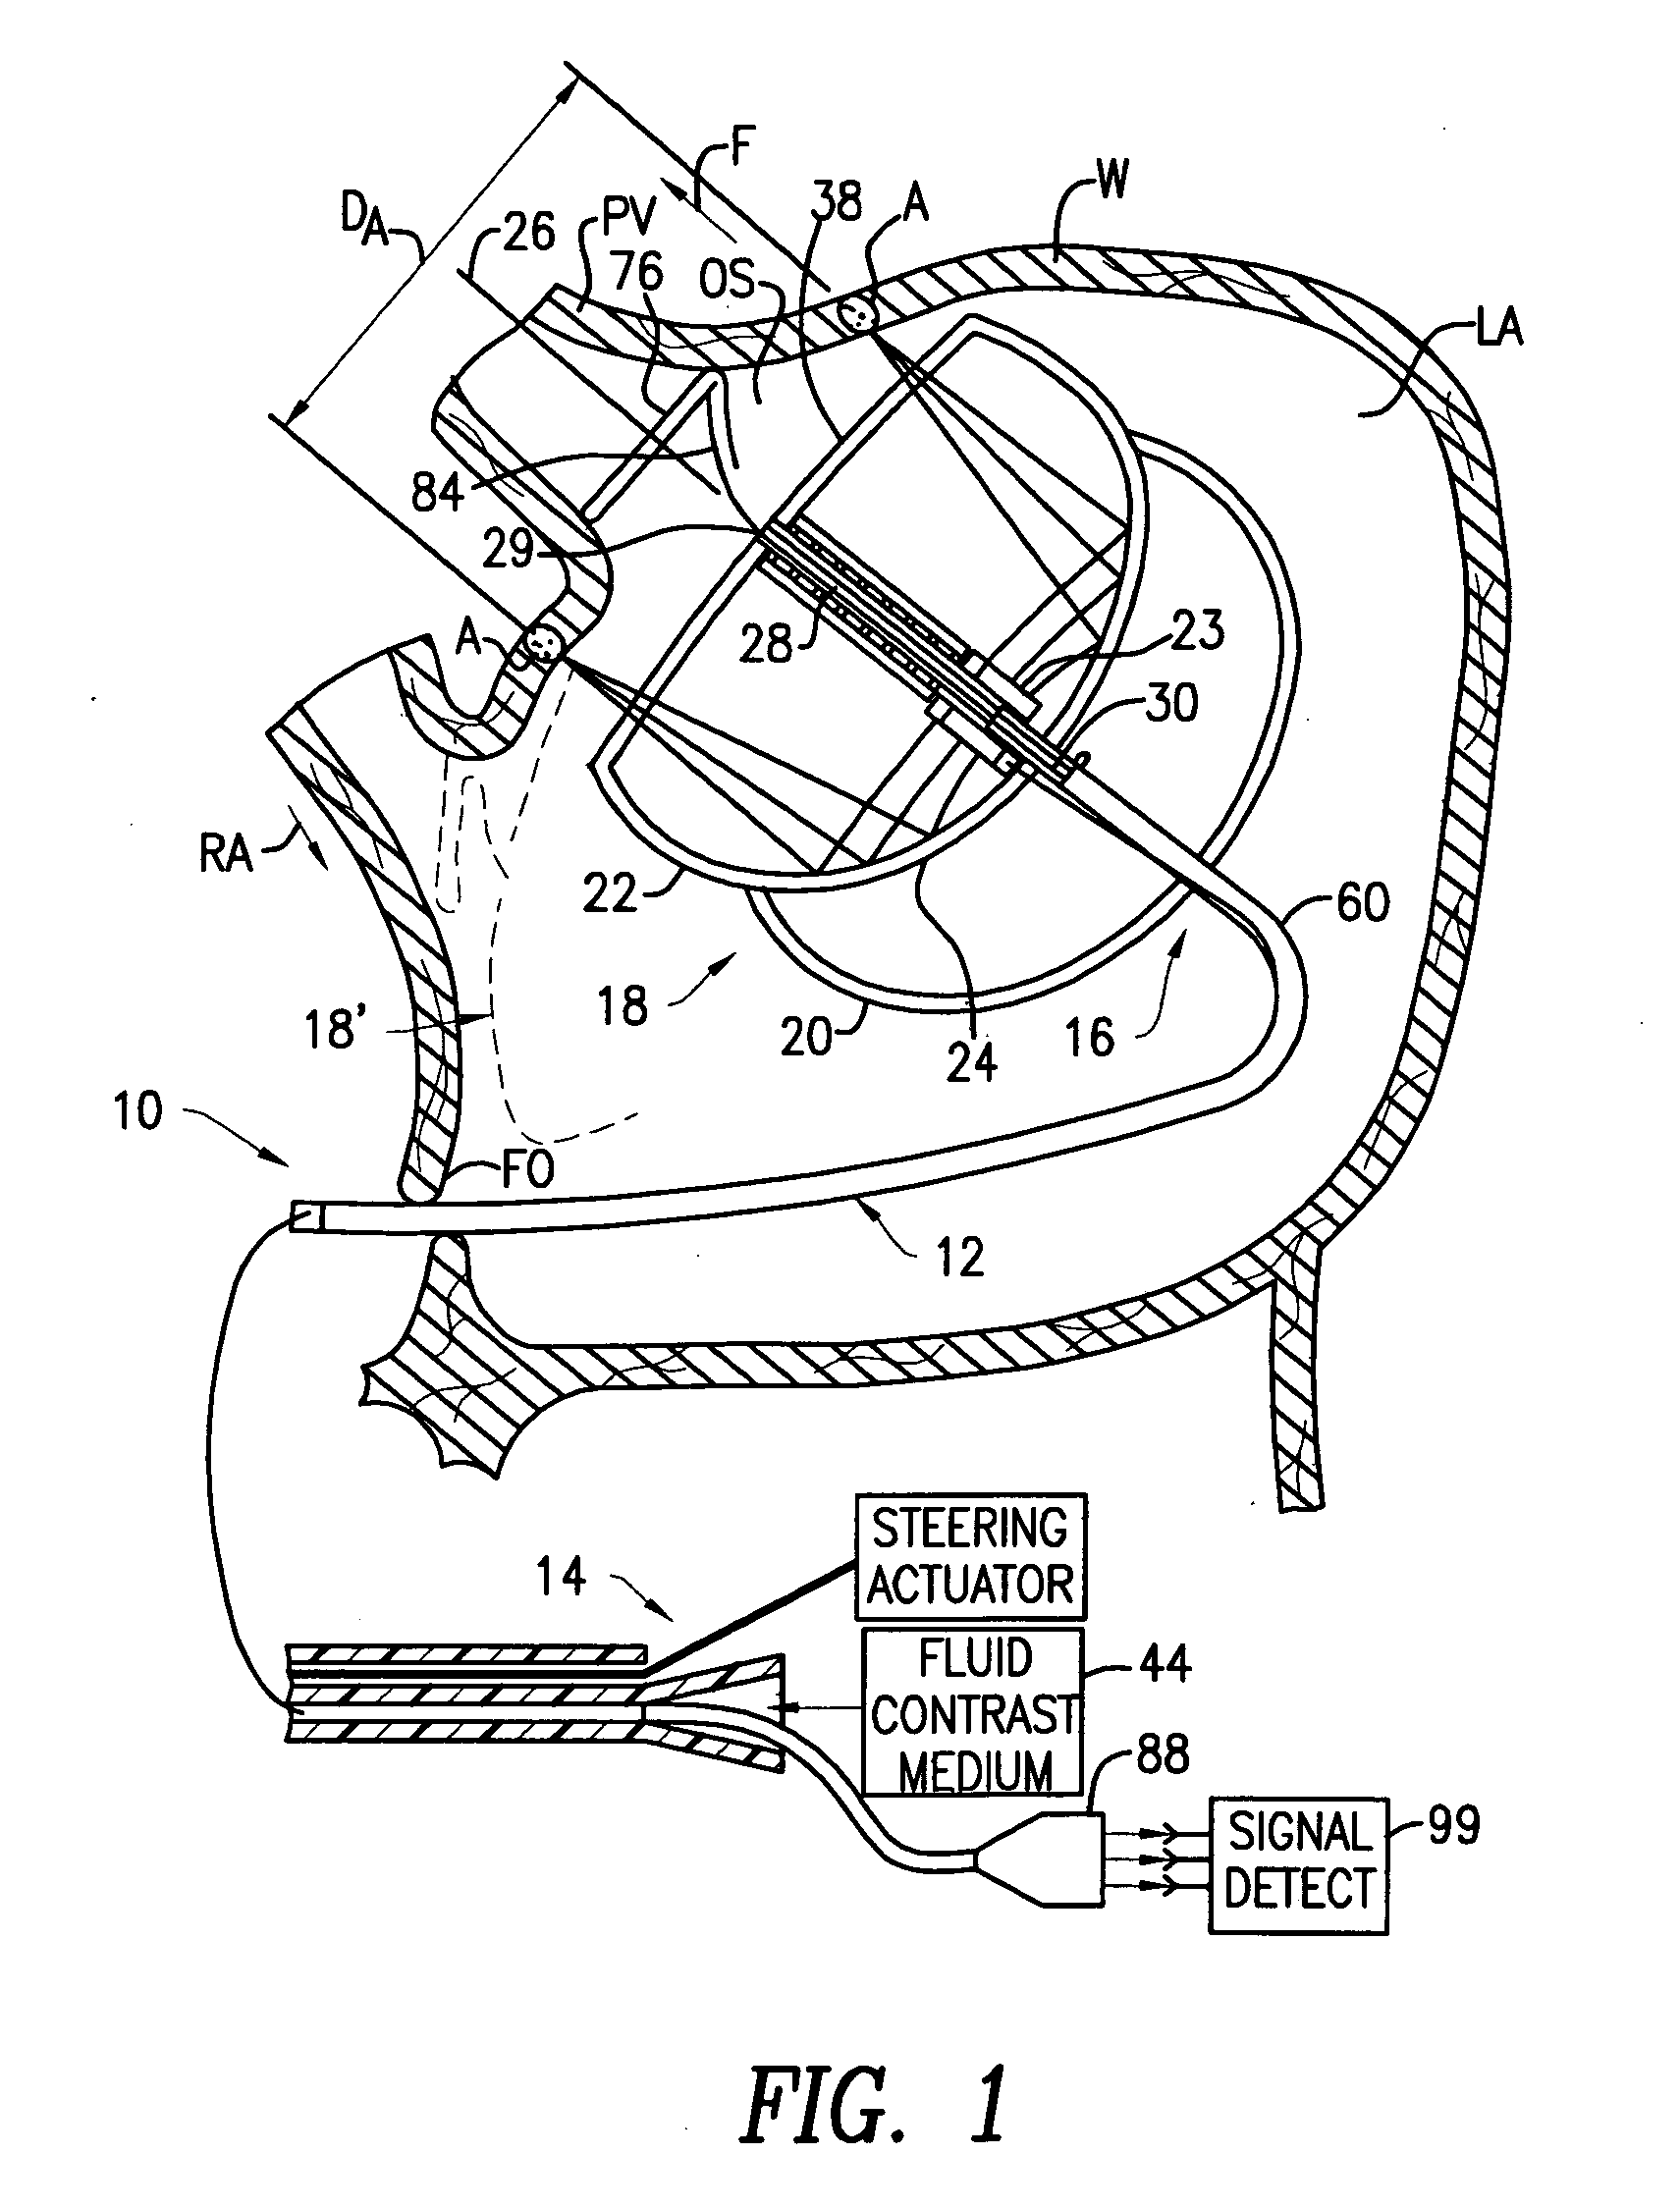 Miniature circular mapping catheter